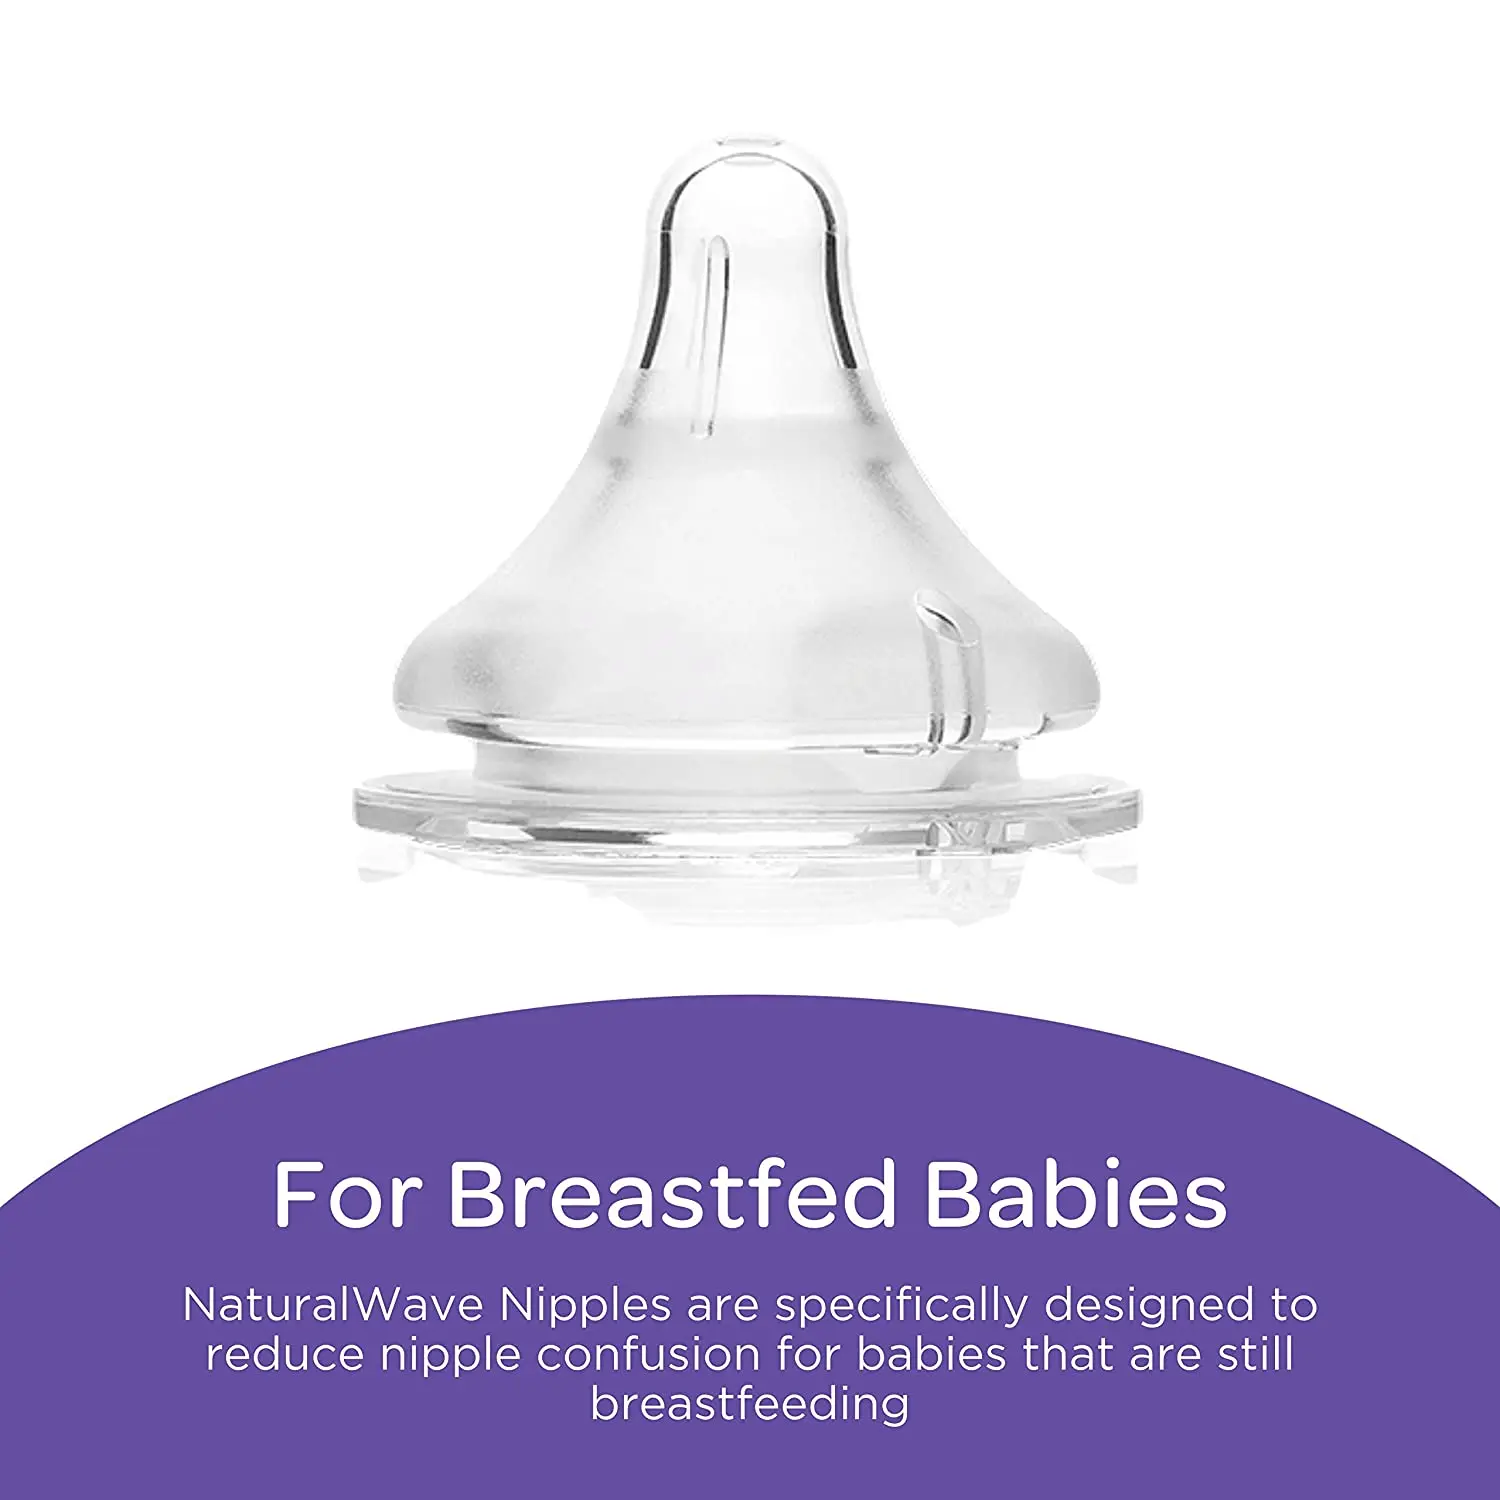 https://ae01.alicdn.com/kf/U7a50100600a54780a64c90375ac641feR/Original-LANSINOH-Bottle-For-Breastfeeding-Babies-2-Pieces-Bundle-Nursing-Moms-Breastfeed-Baby-Feeding-Bottles-NaturalWave.jpg